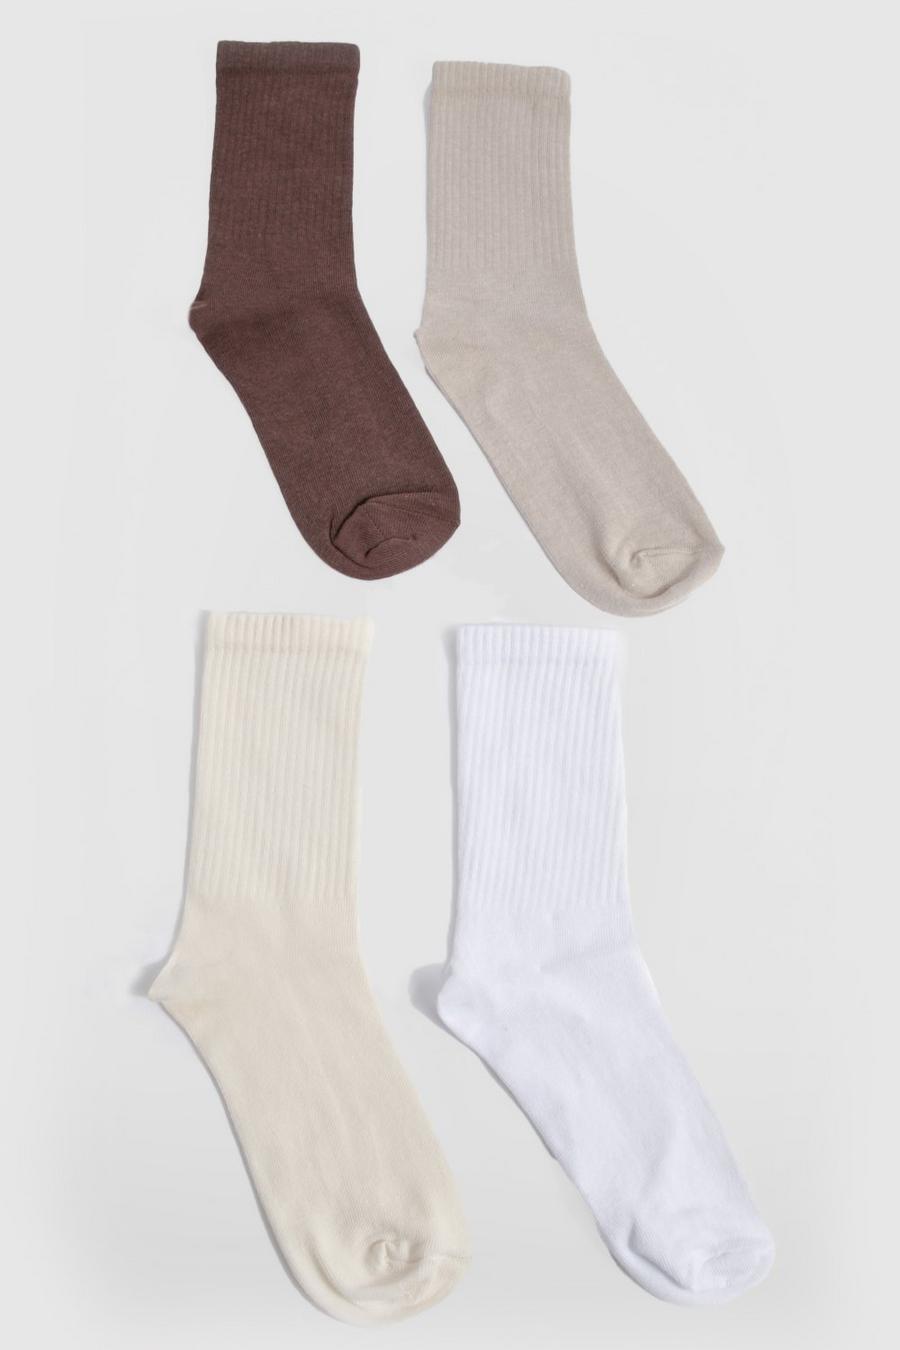 Tall Satin Cotton Socks - Long socks - Calzedonia